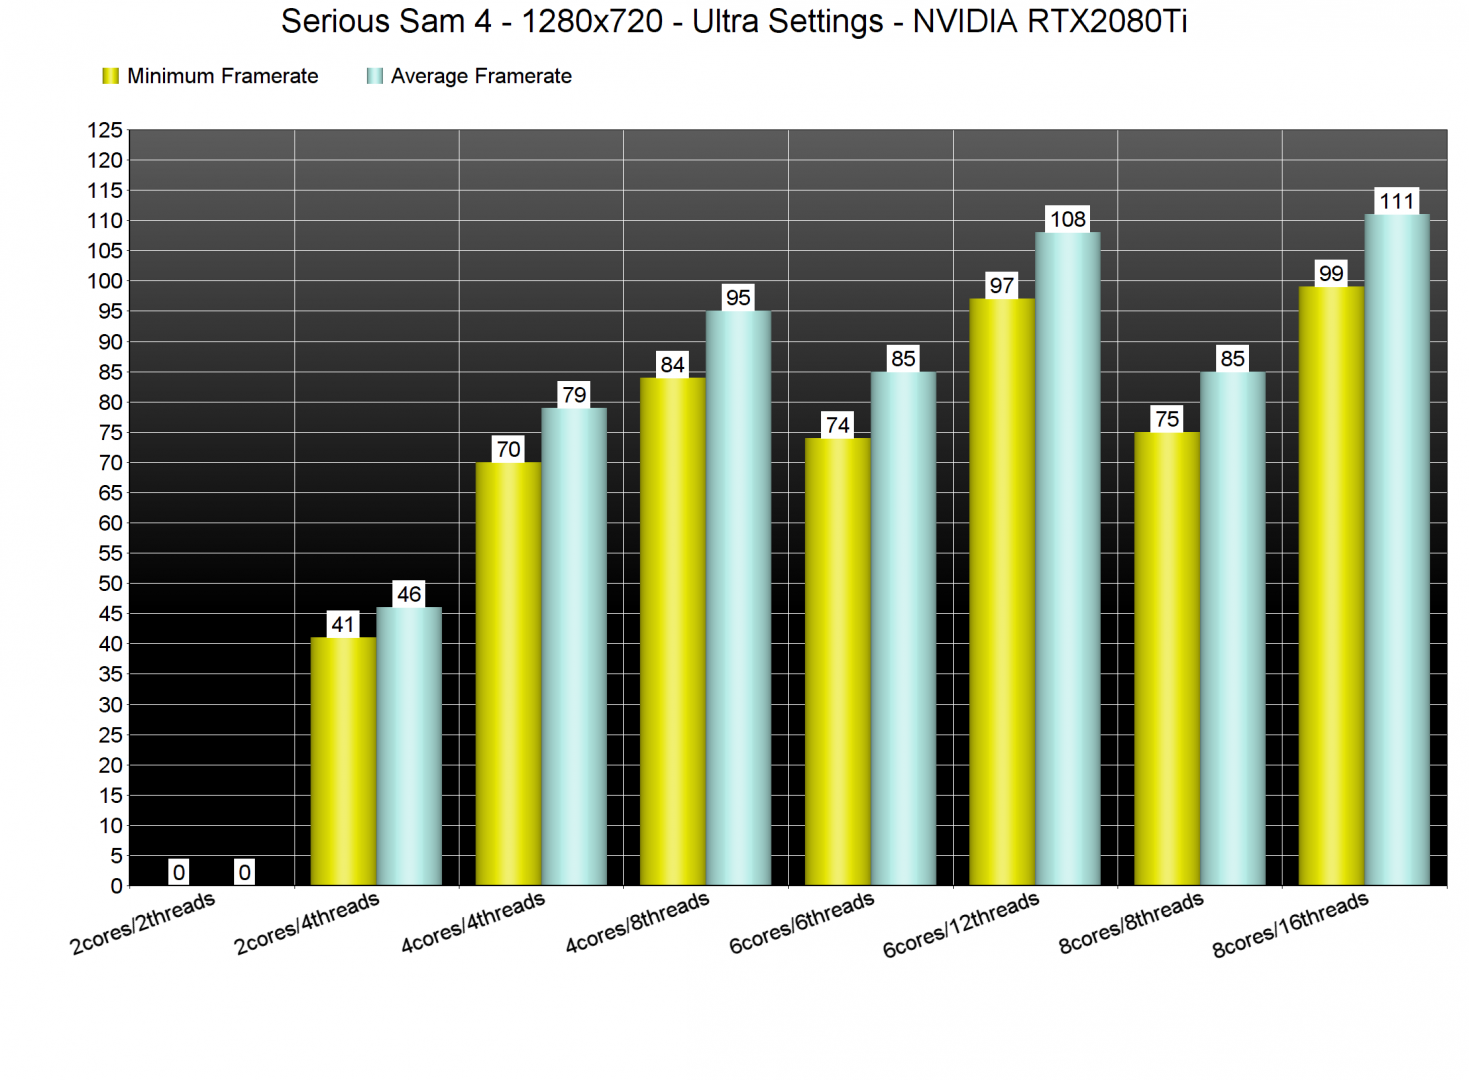 Serious Sam 4 CPU benchmarks